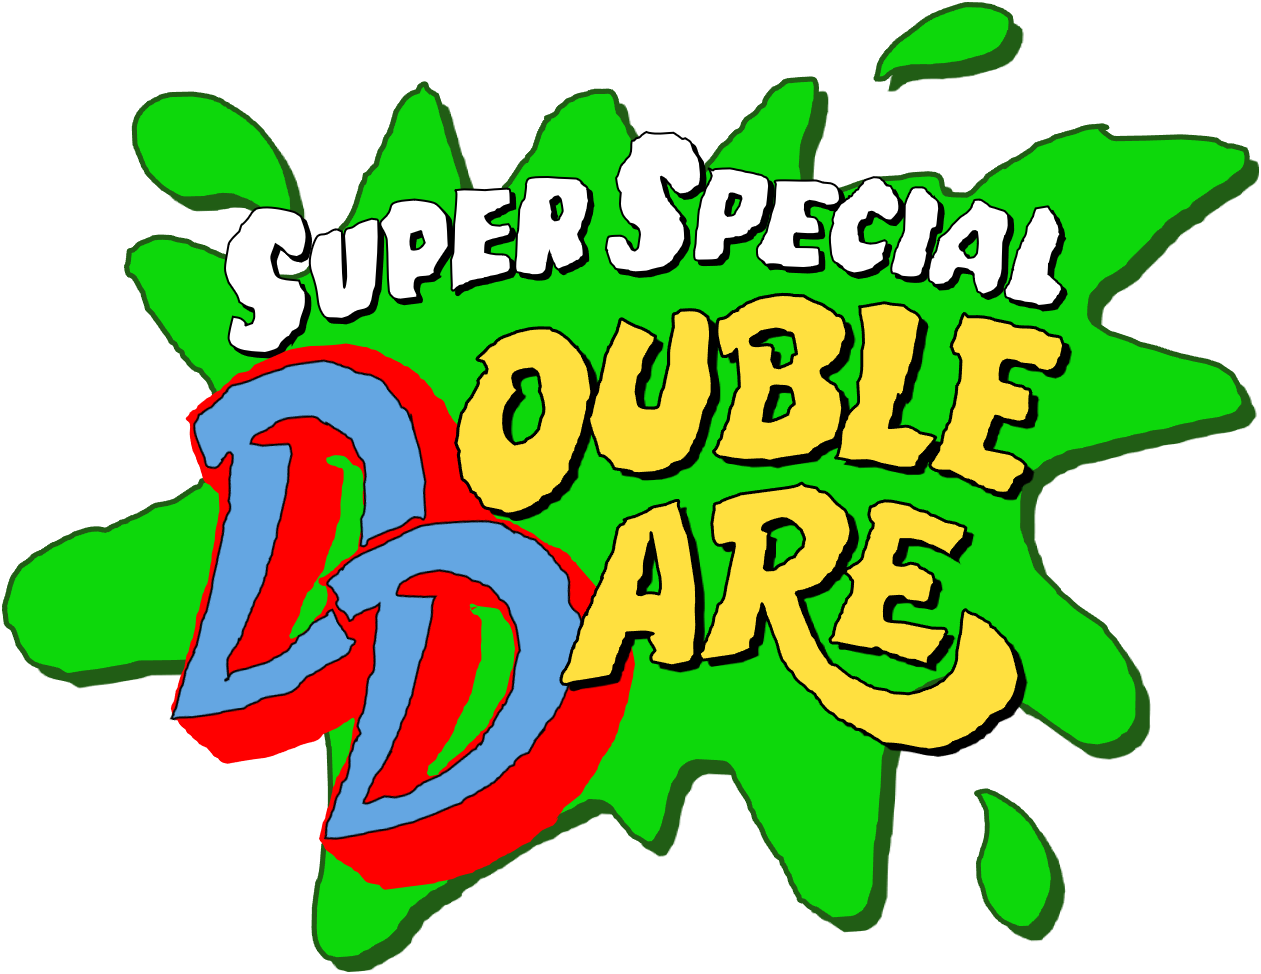 Super Special Double Dare Logo by cwashington2019 on DeviantArt